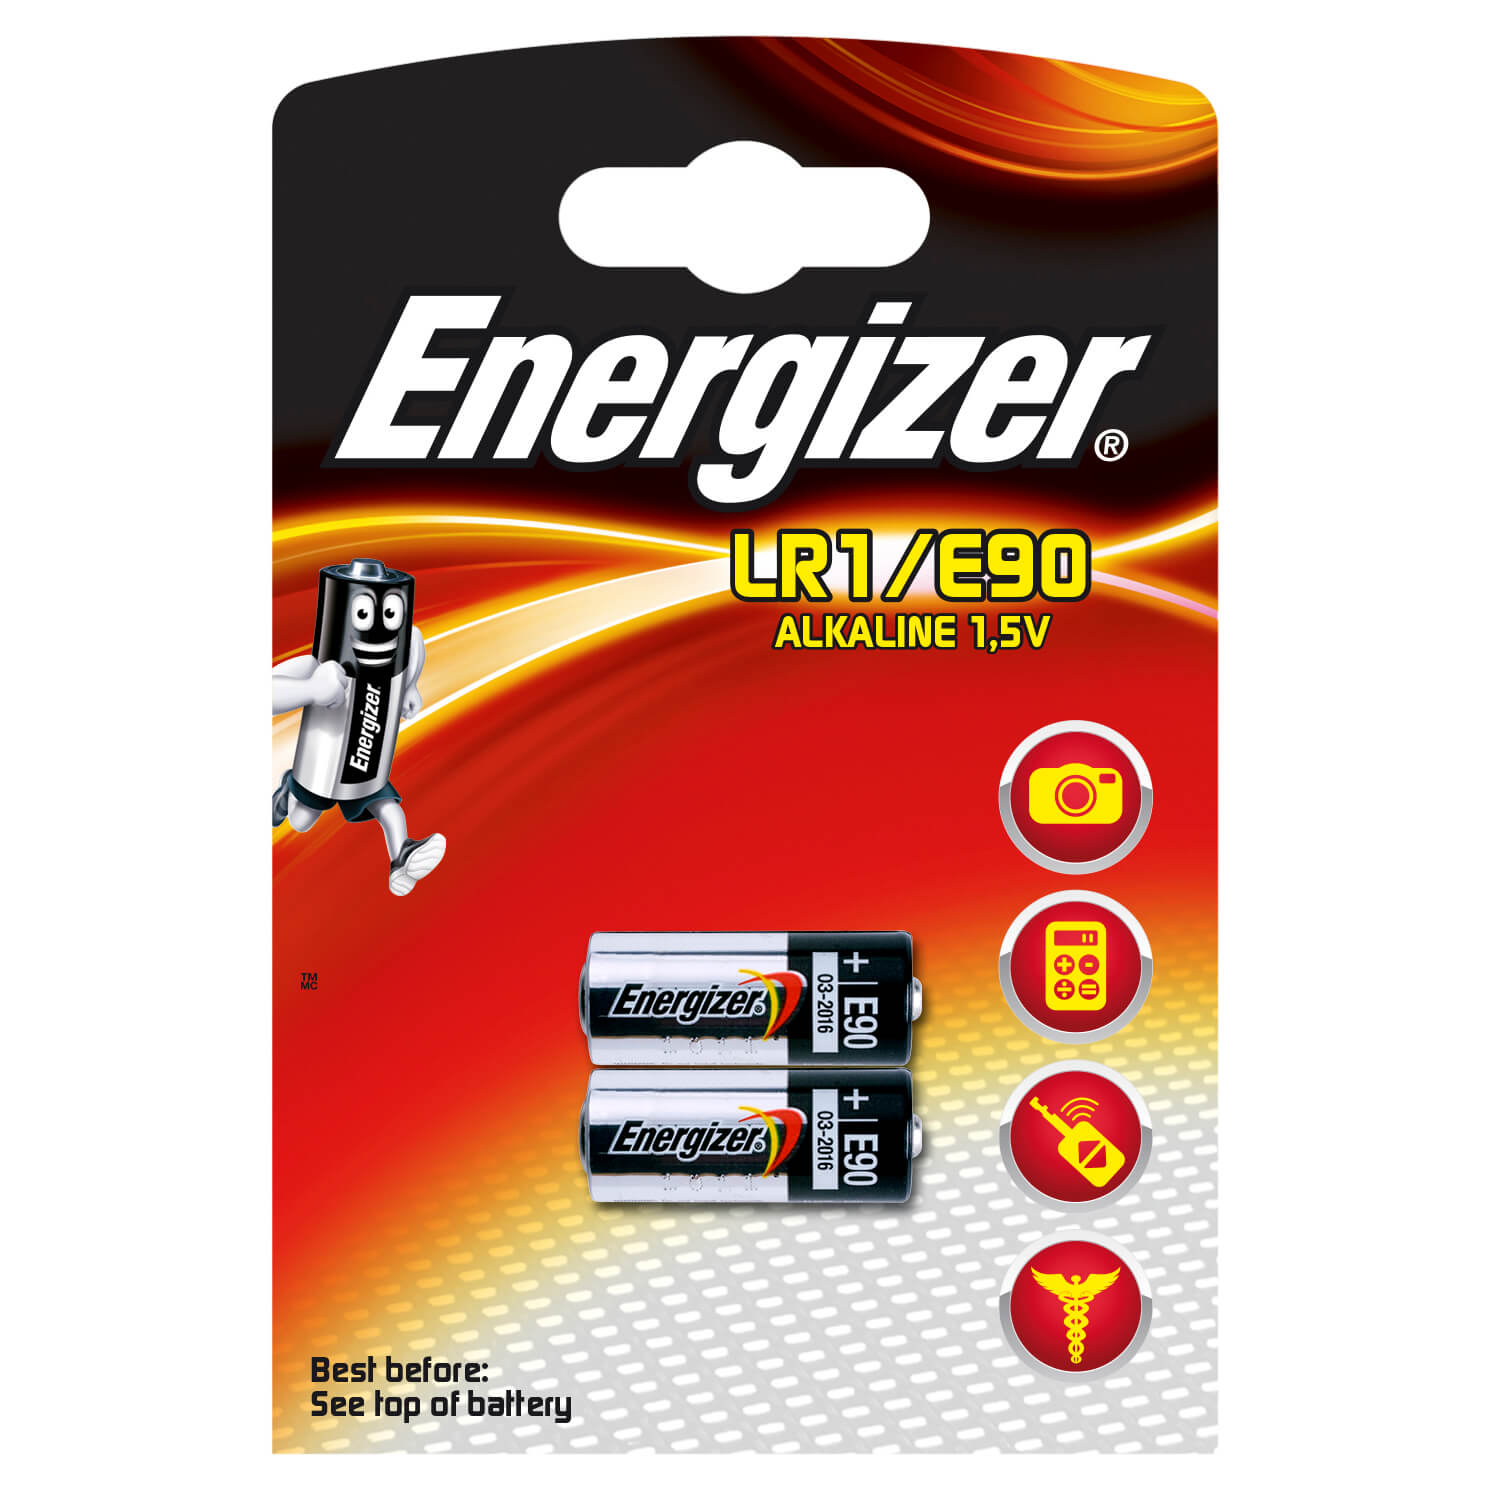 ENERGIZER Battery LR1/E90 Alkaline 2-pack